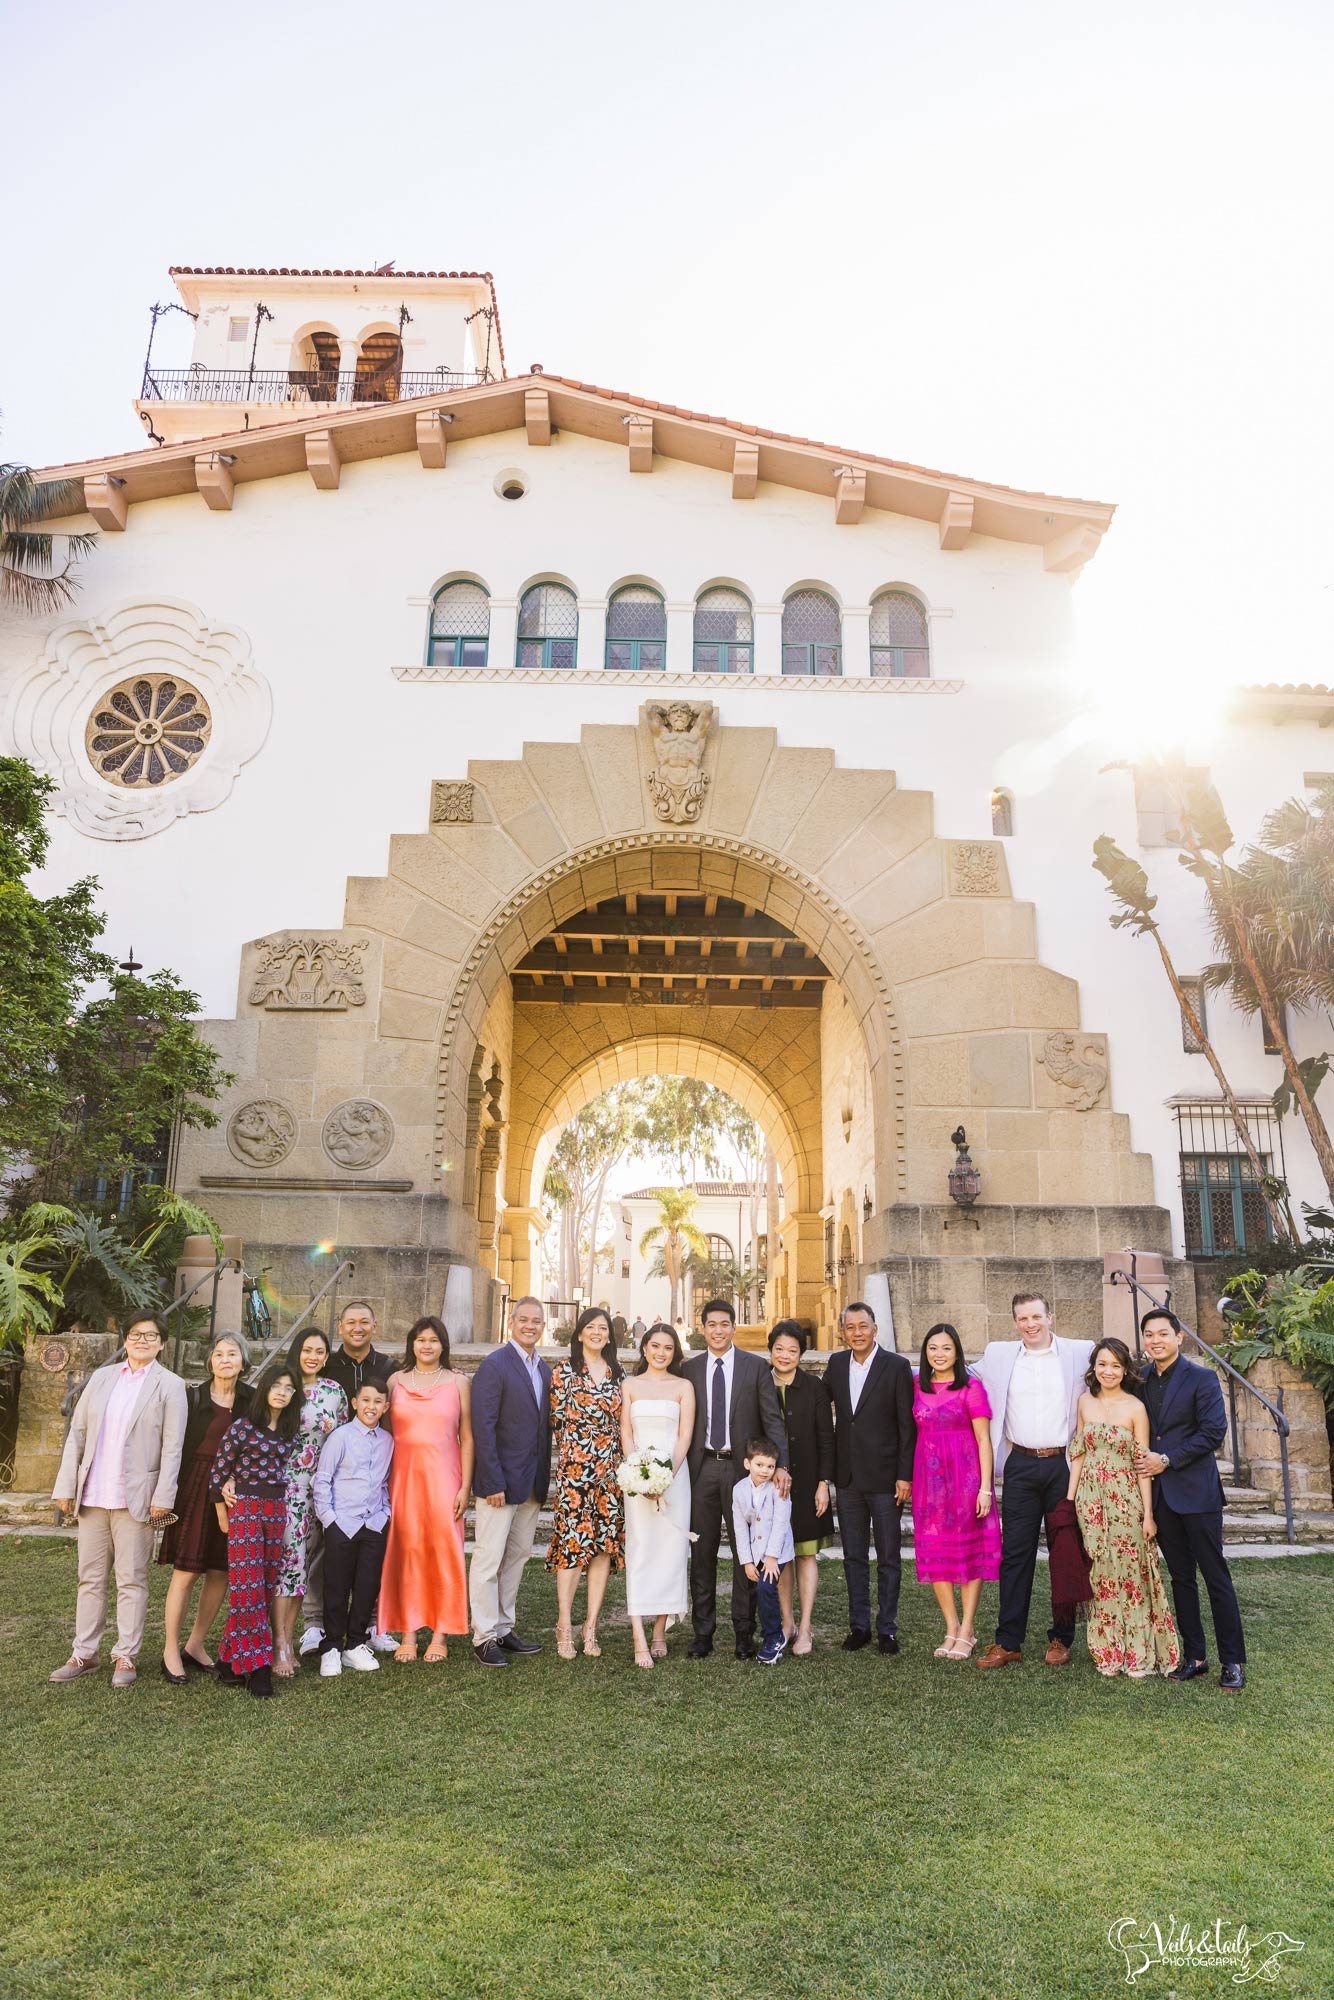 Santa Barbara Courthouse wedding photographer family